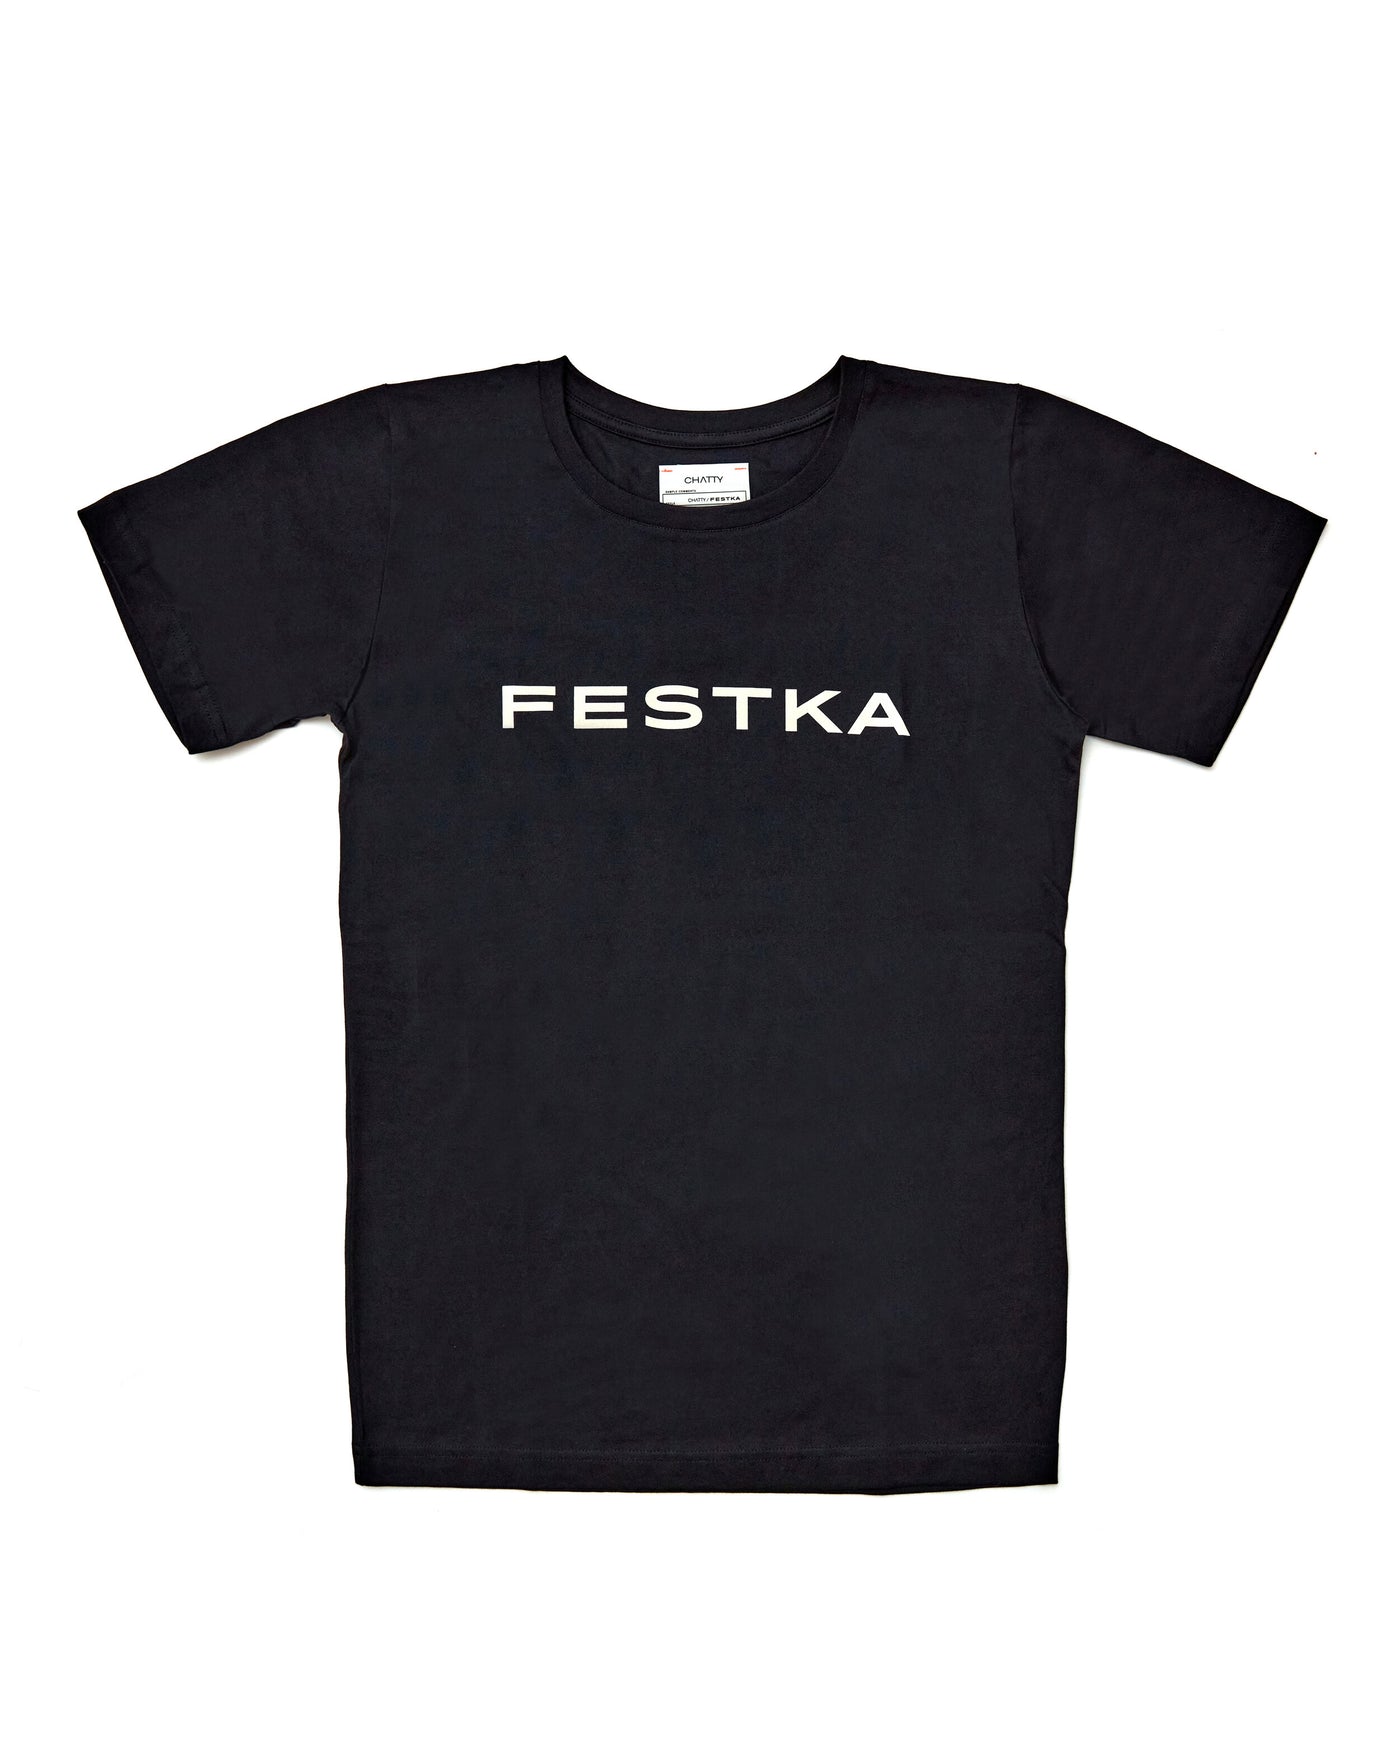 Festka x CHATTY t-shirt BLACK